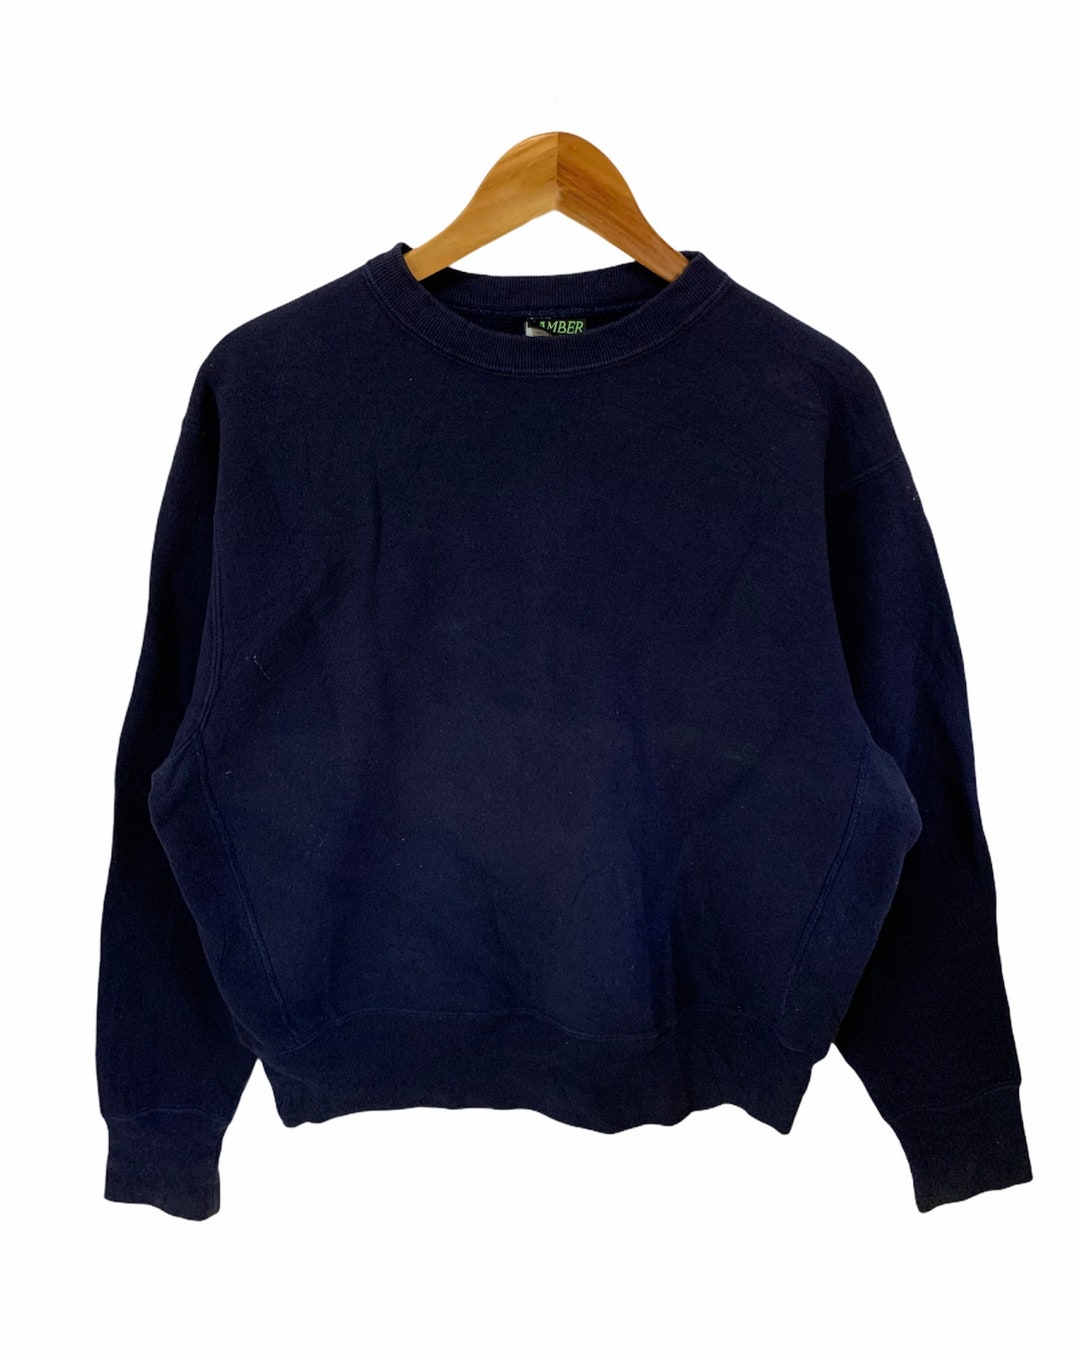 Vintage 90s Sweatshirt Made in Usa Jumper Pullover 90s Fashion Plain ...